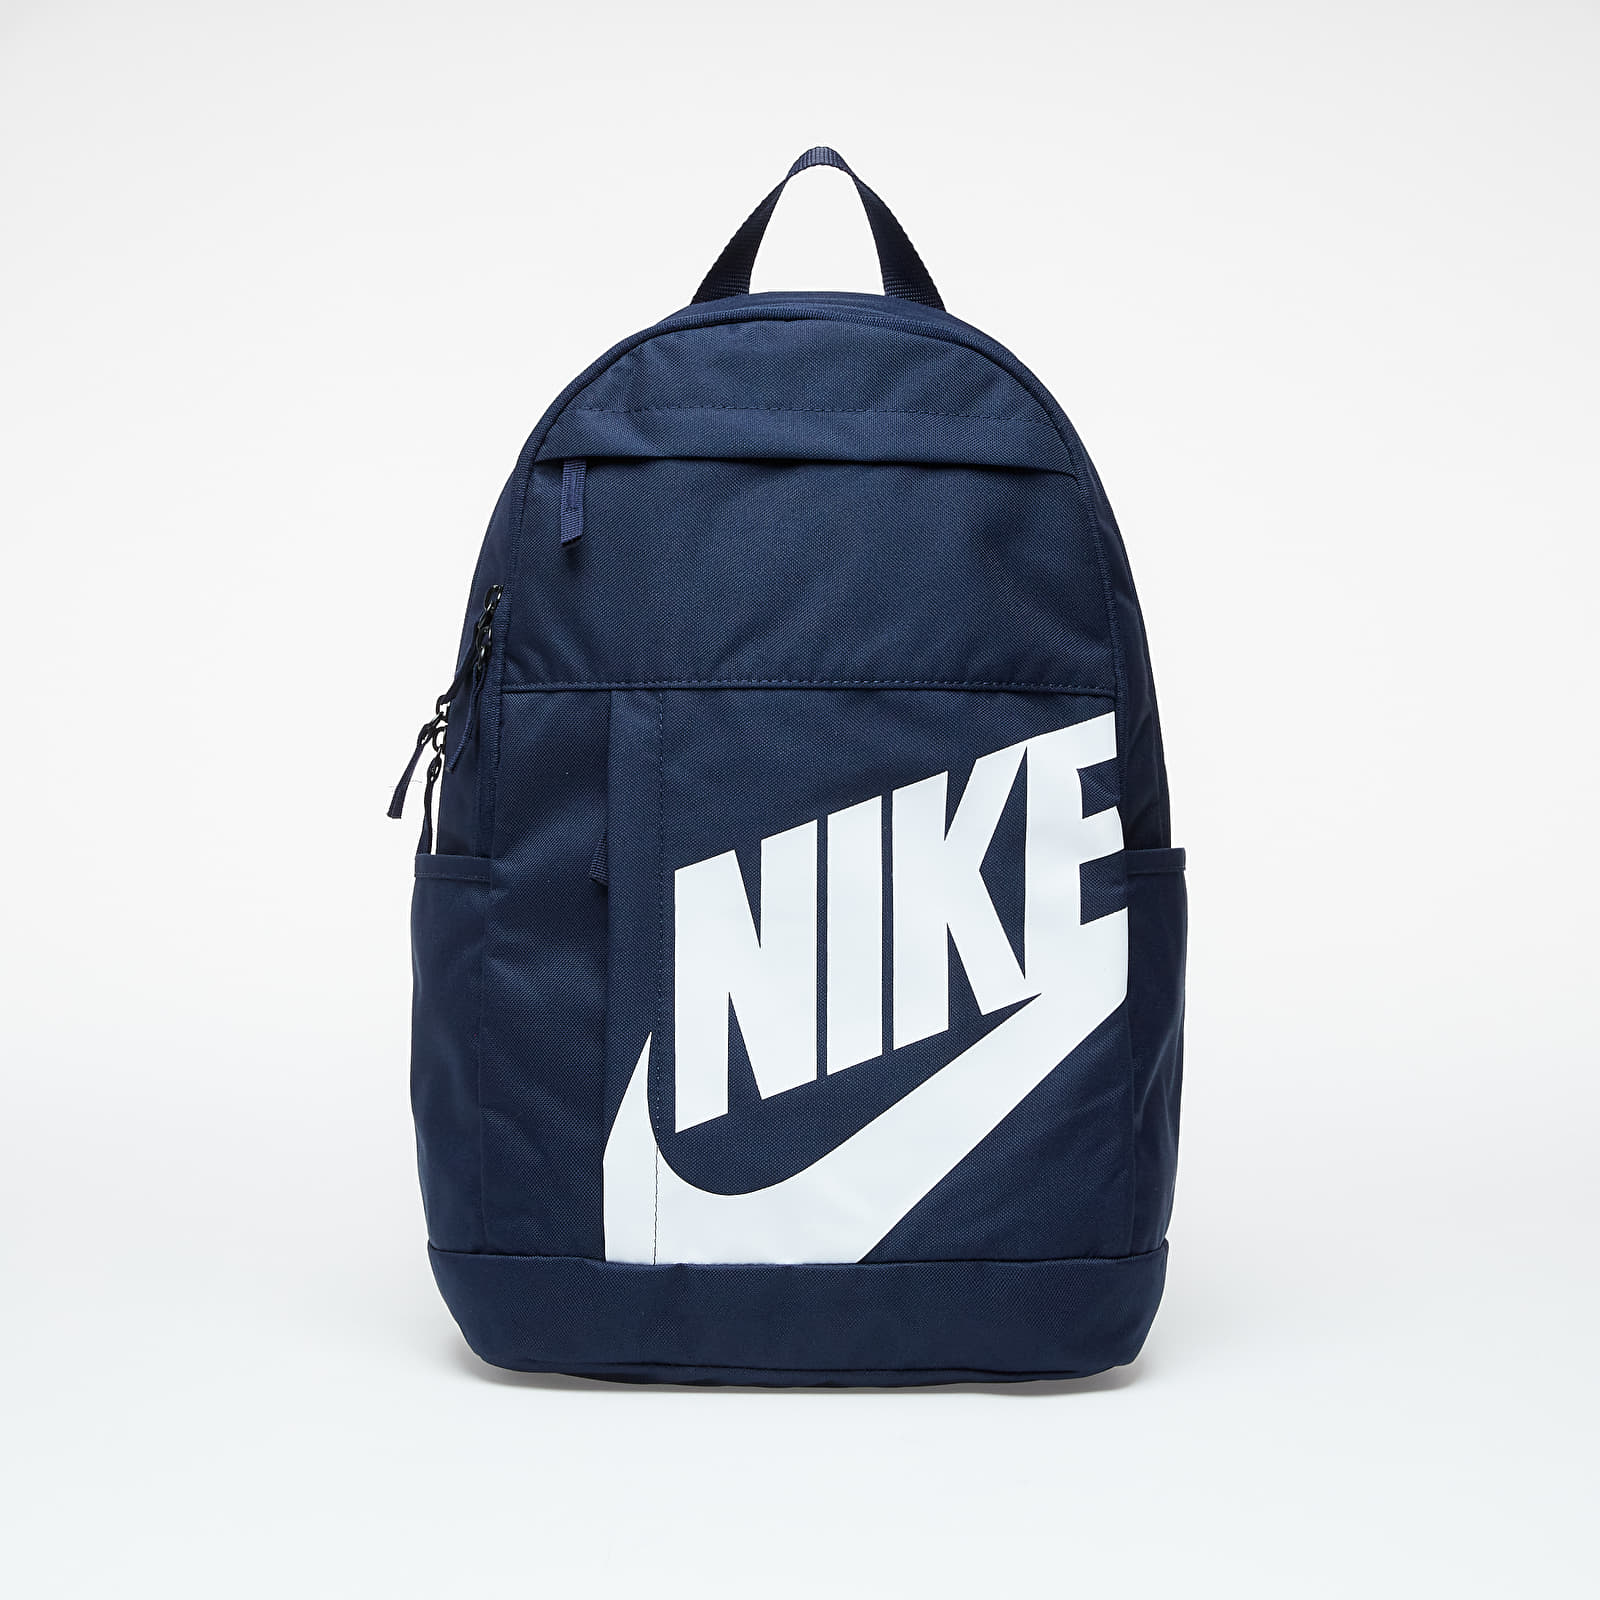 Раници Nike Elemental Backpack Obsidian/ Obsidian/ White 298379